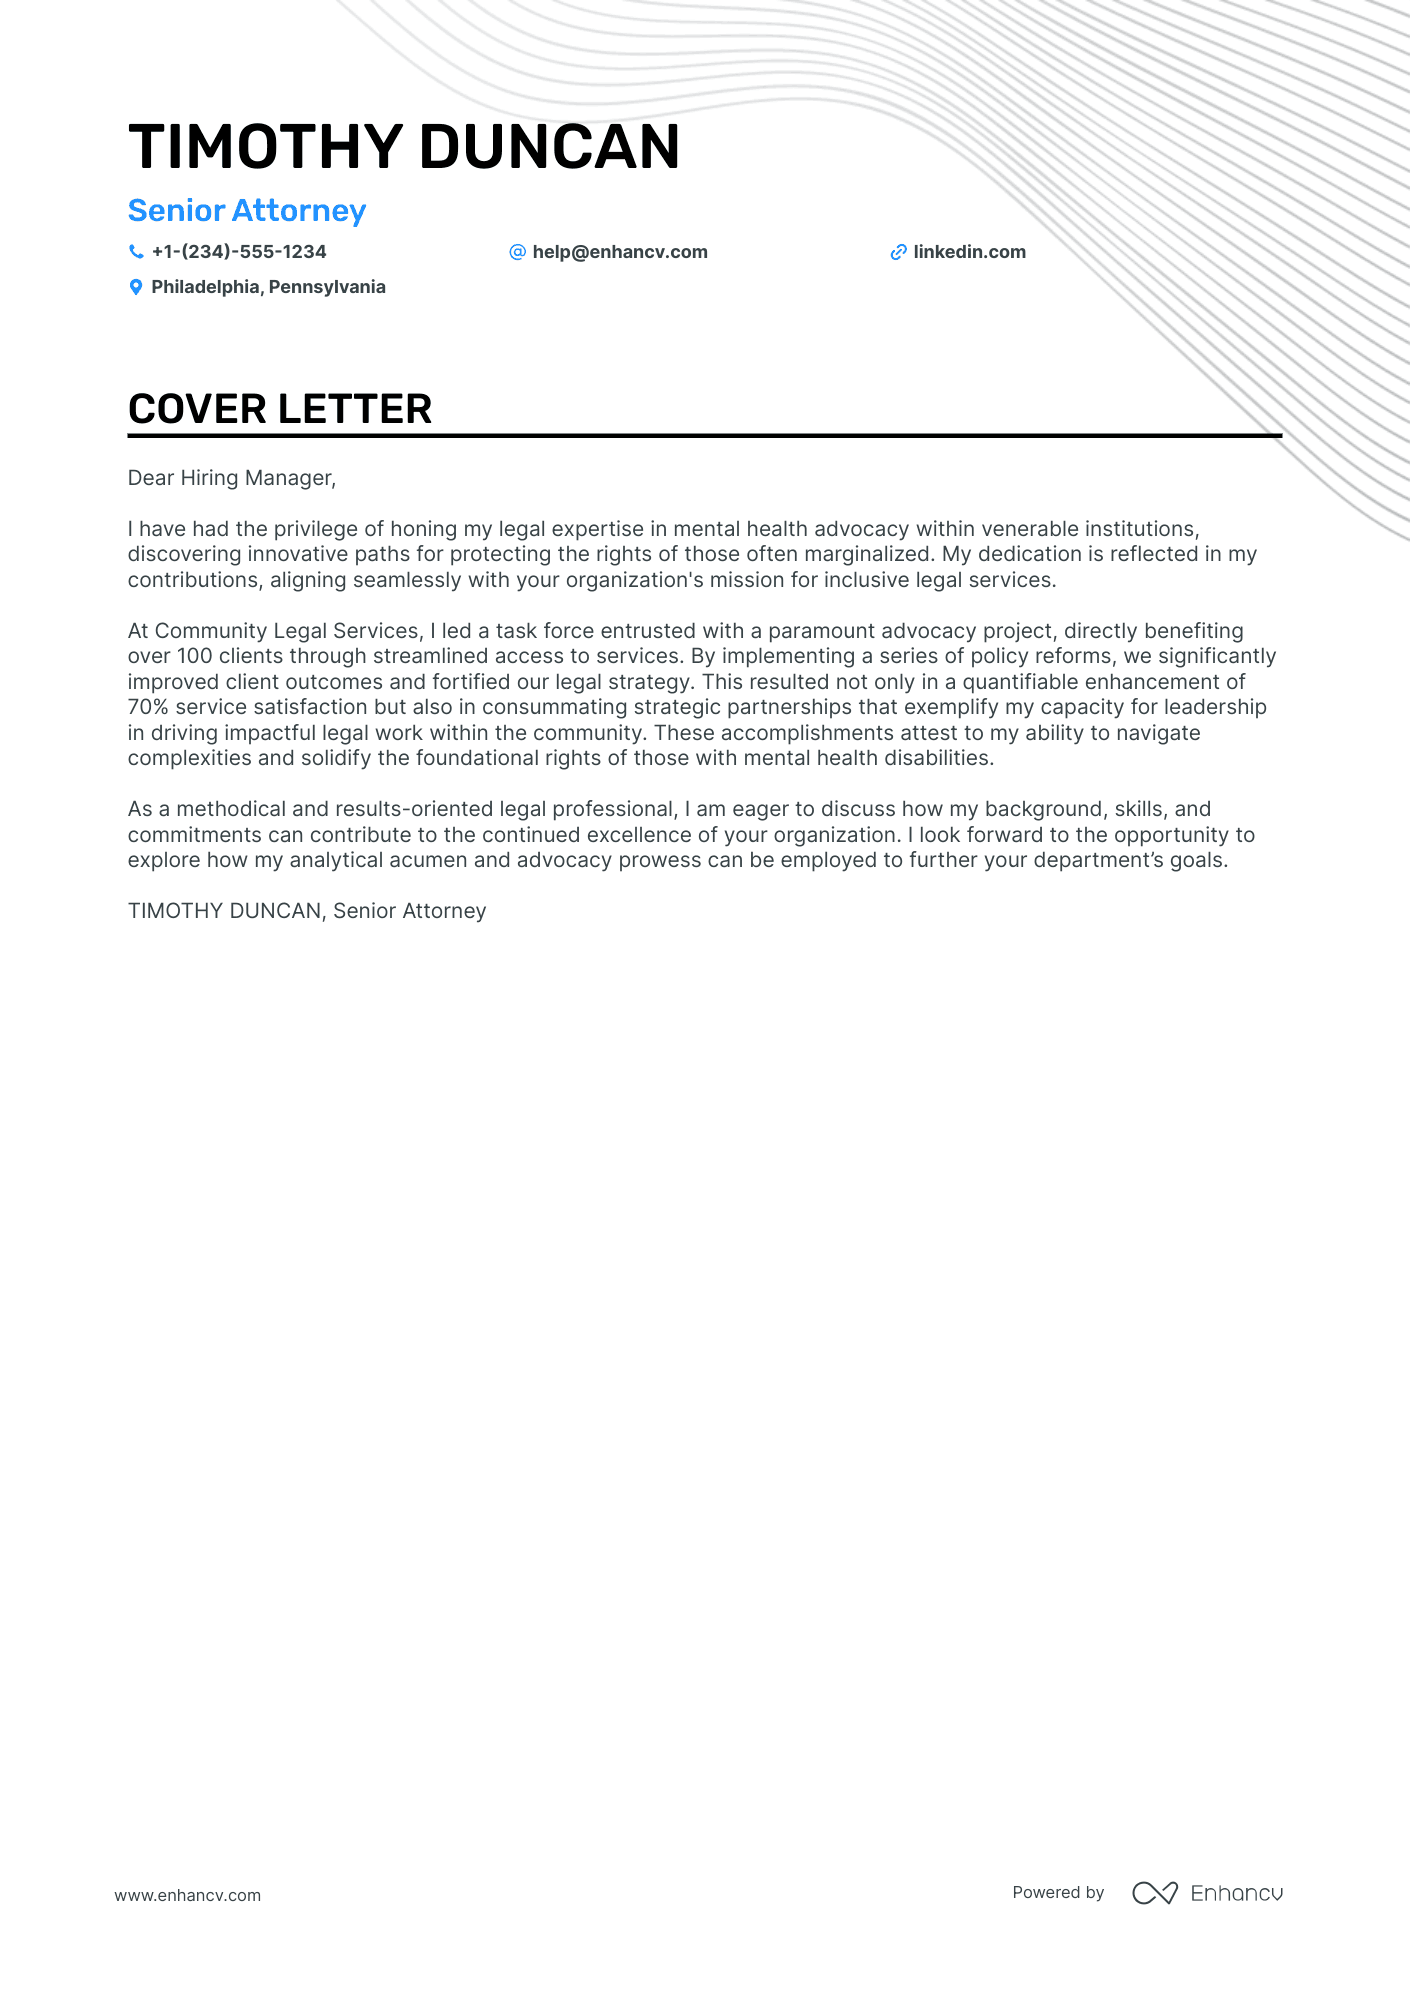 Senior Attorney cover letter